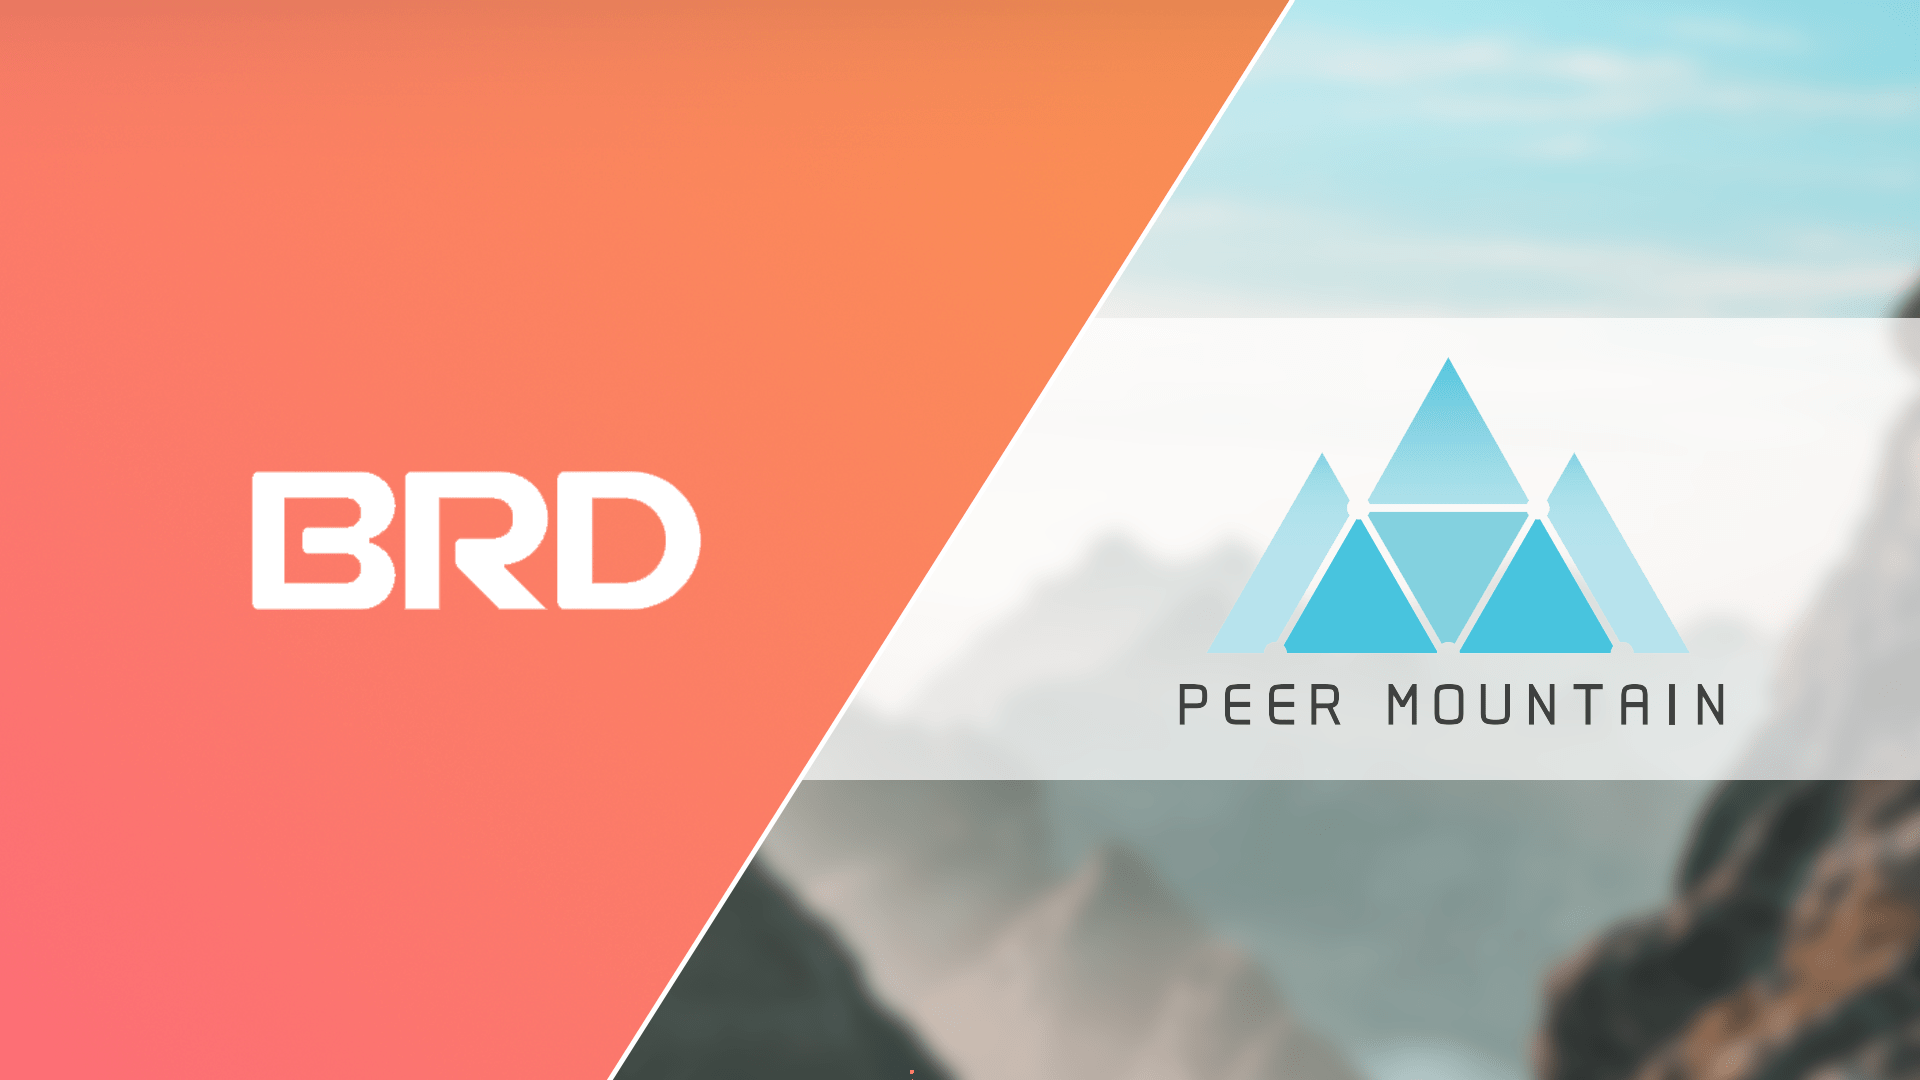 peer mountain, brd